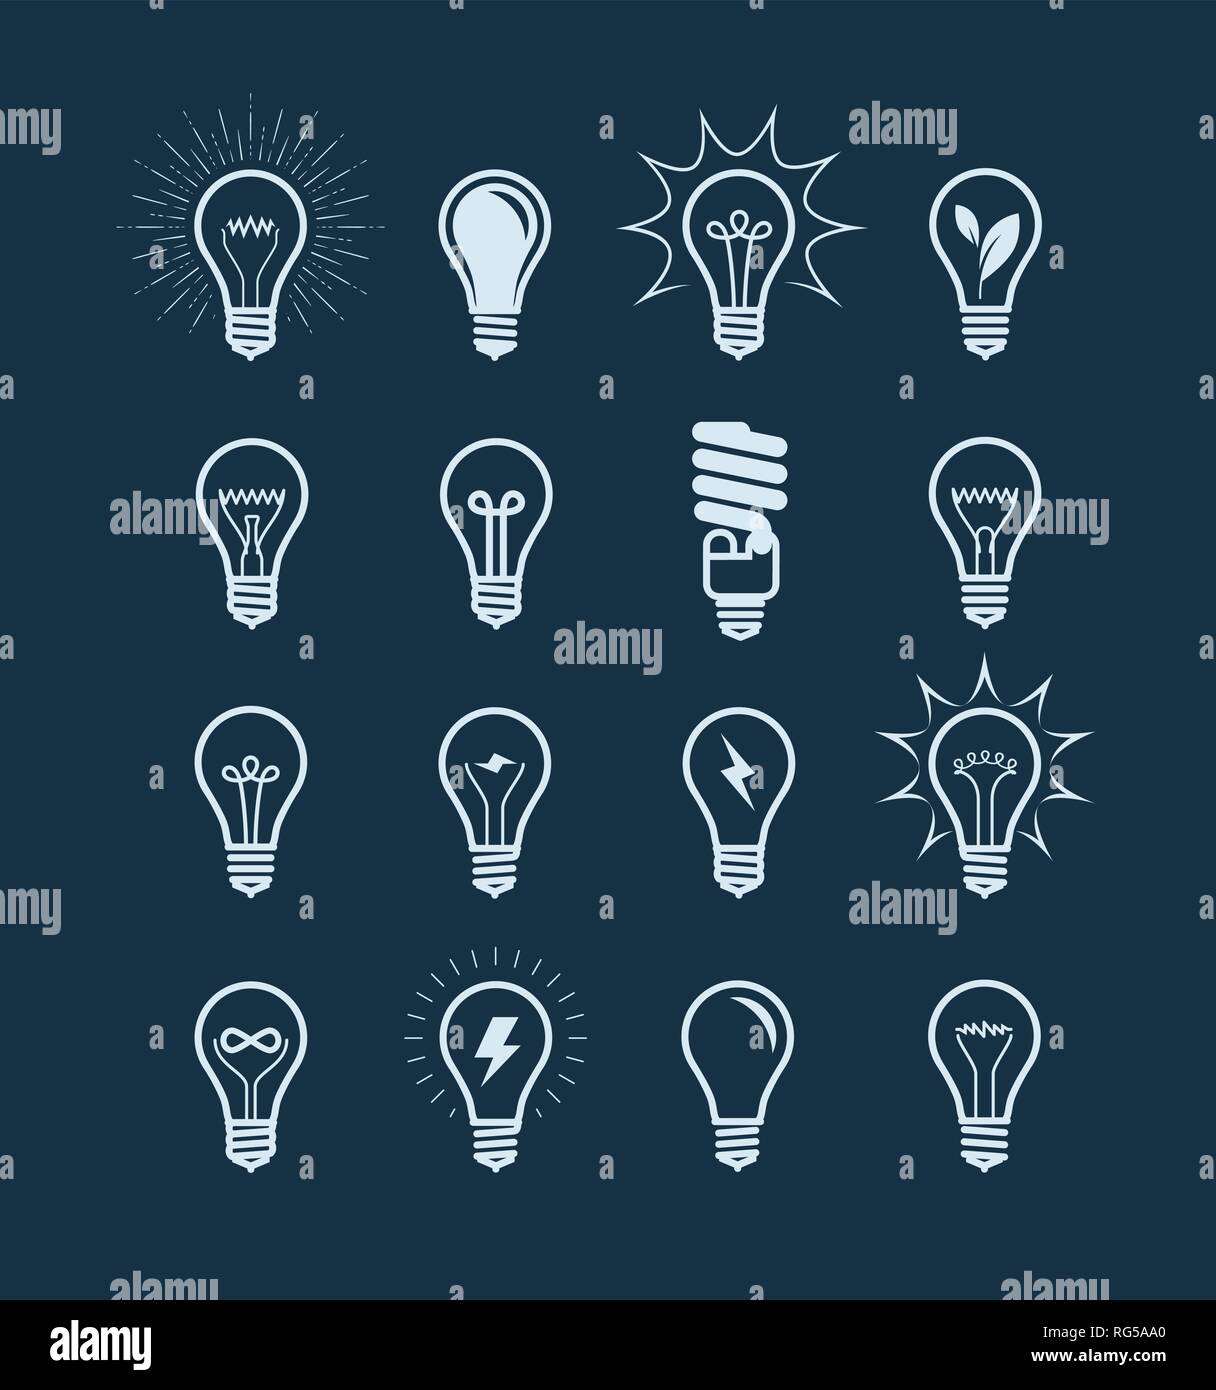 Light bulb icon set. Lightbulb, electricity, energy symbol or label. Vector  Stock Vector Image & Art - Alamy